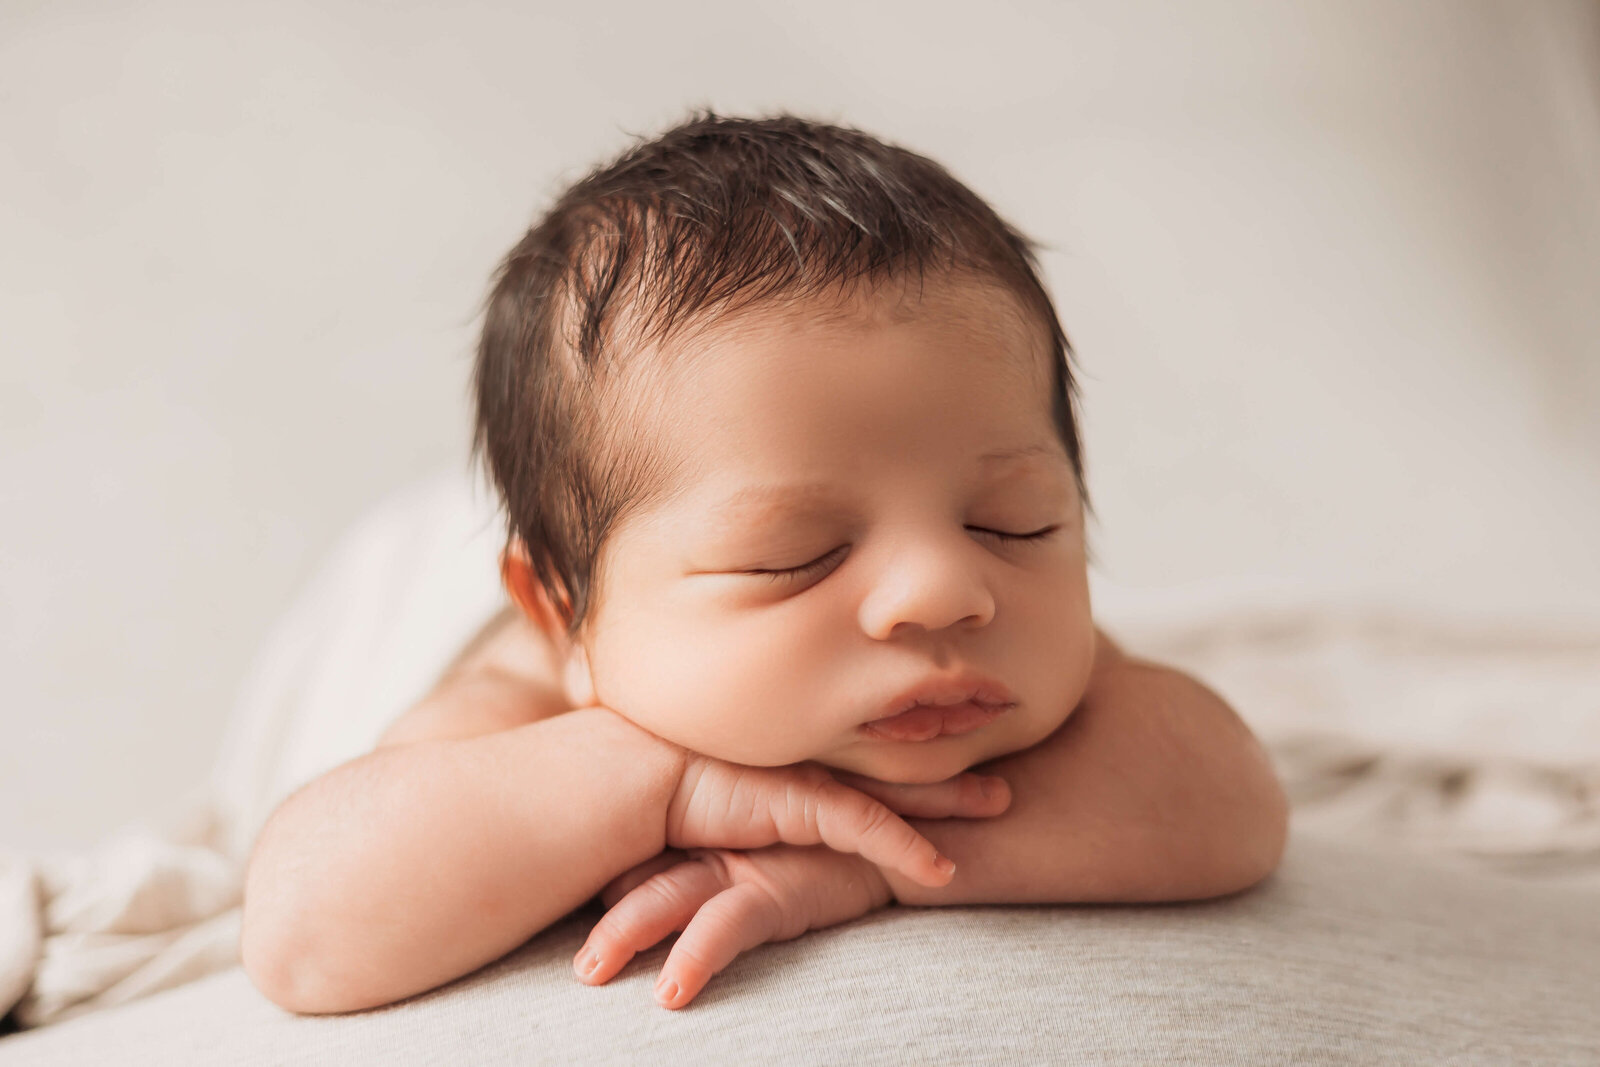 Newborn baby boy sleeping with his head on his hands